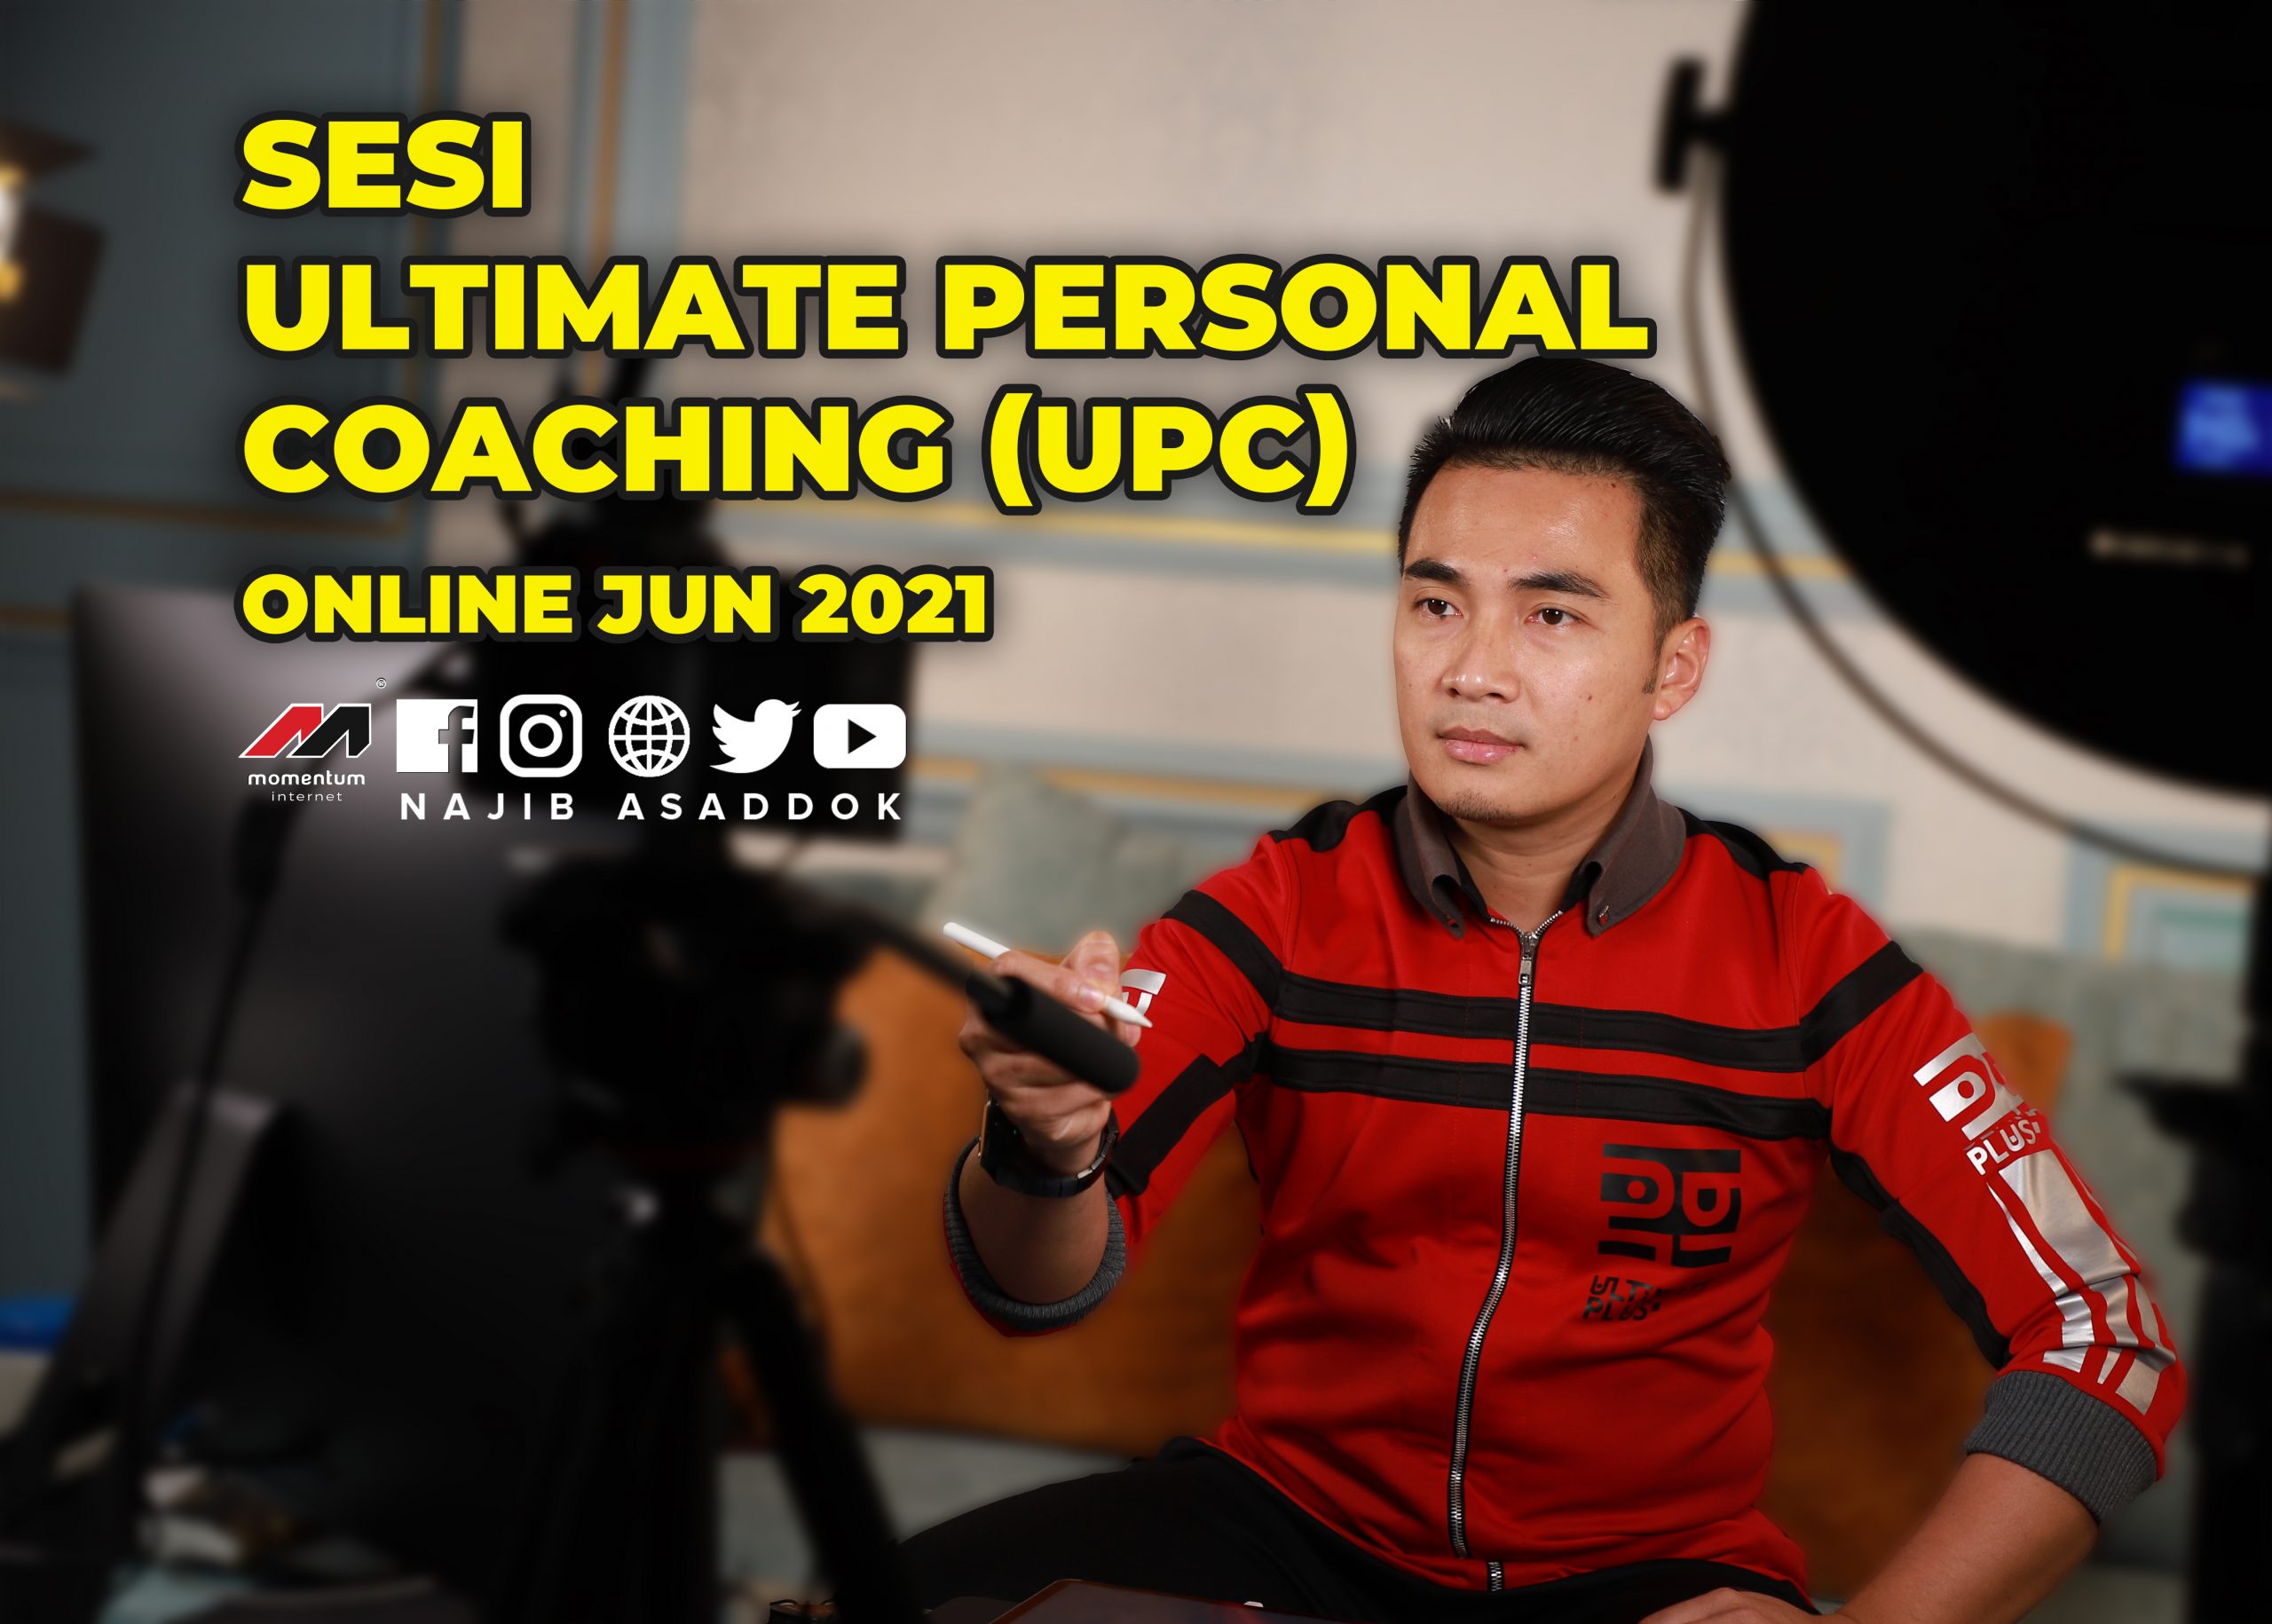 Sesi Ultimate Personal Coaching UPC